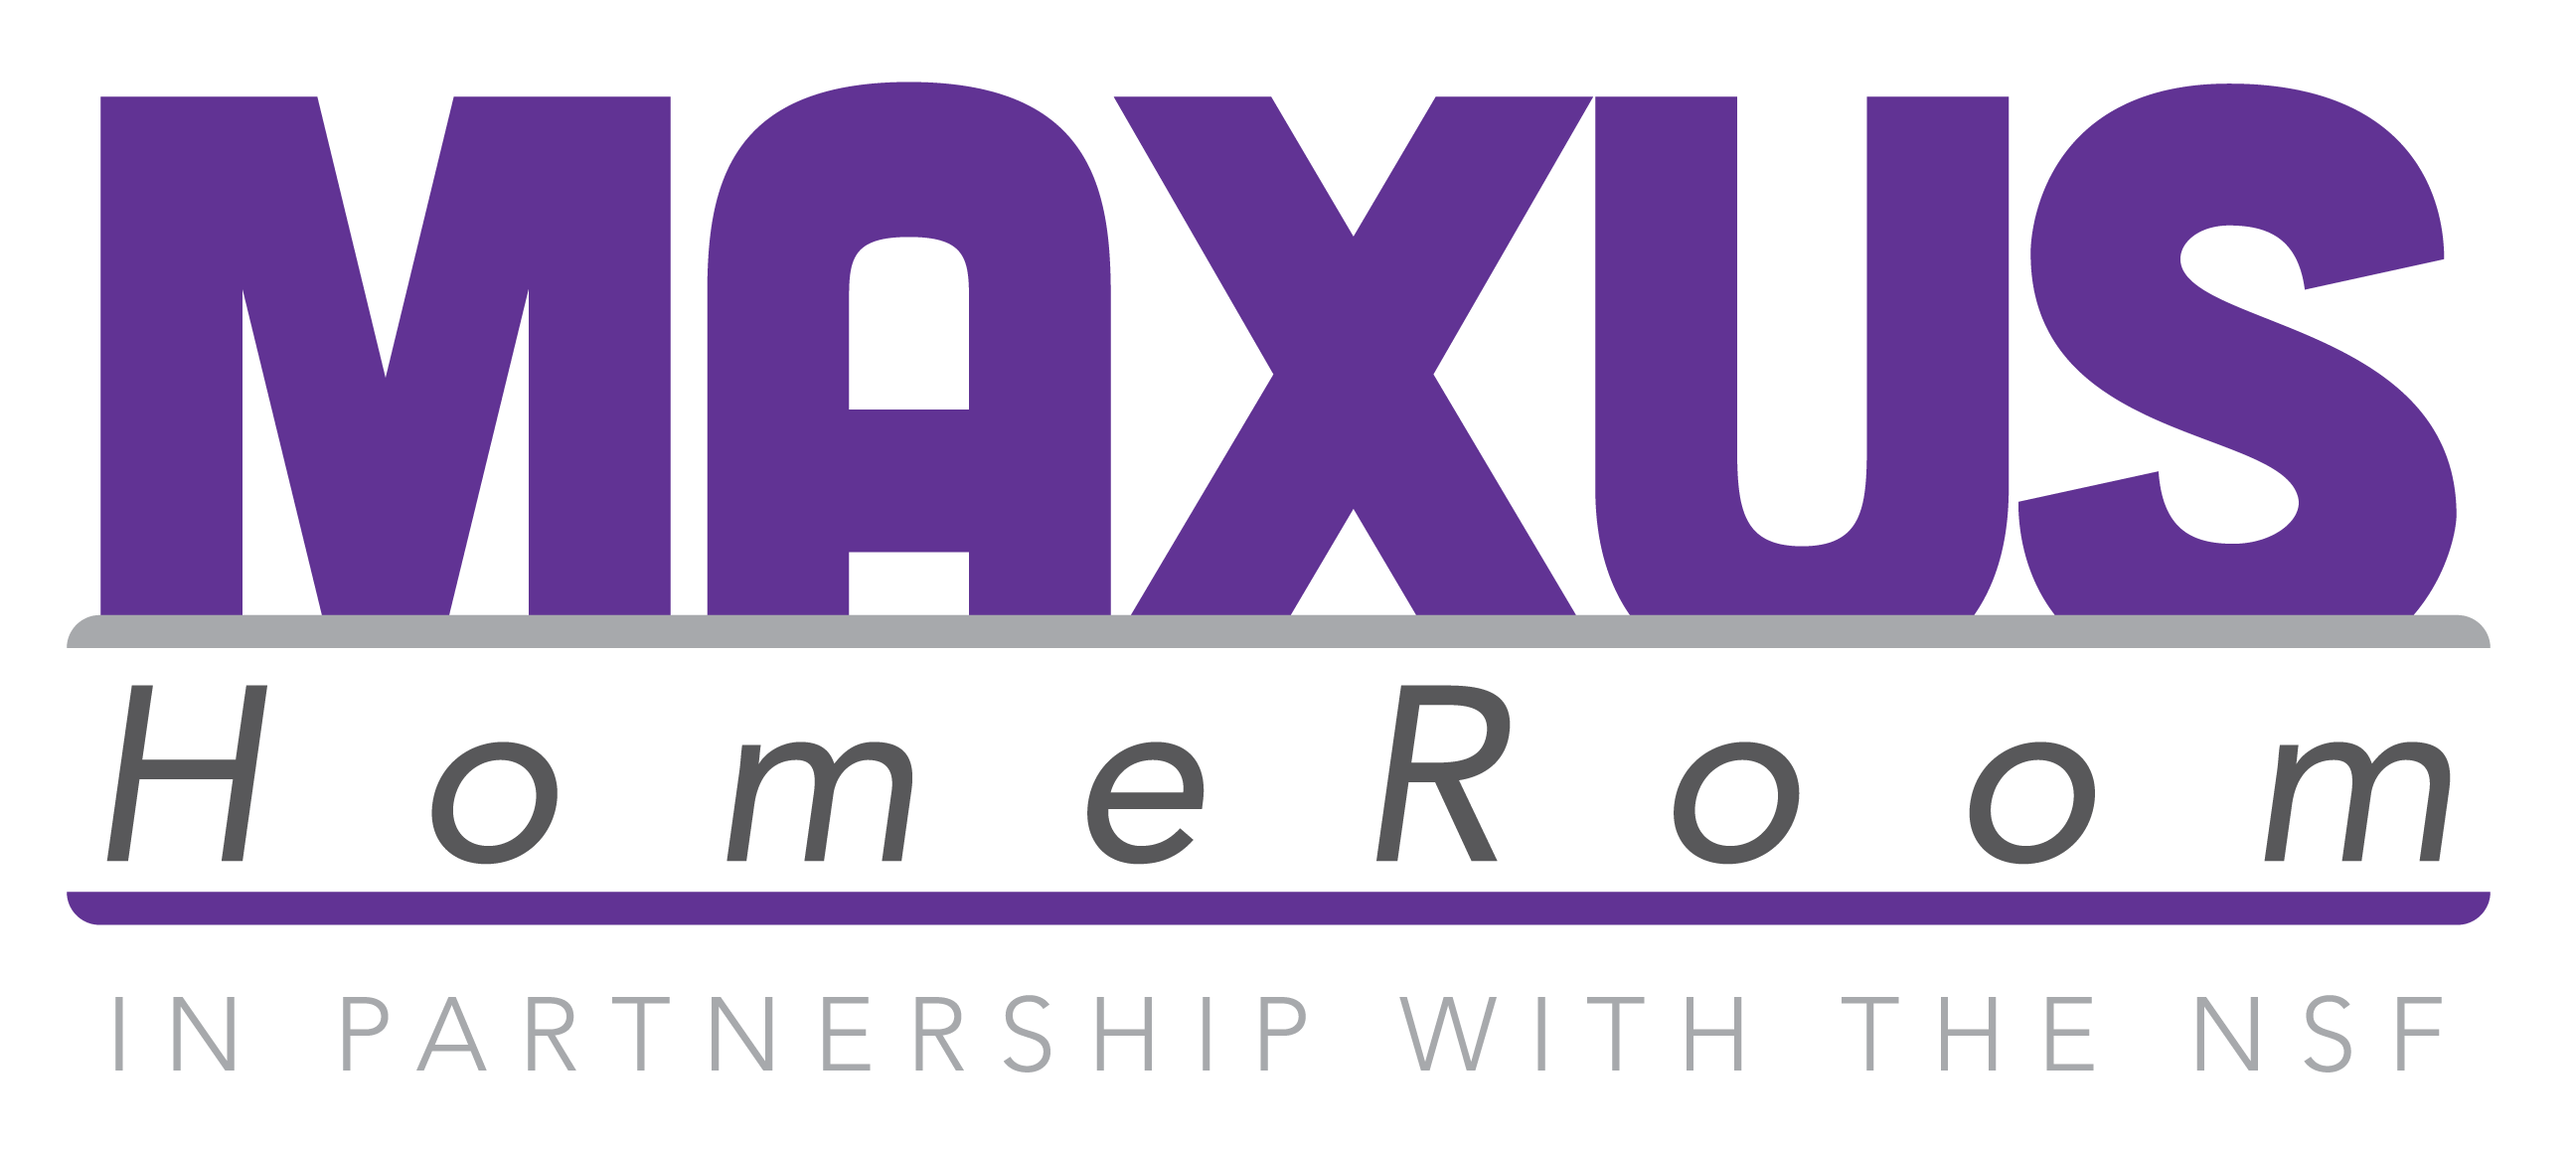 Maxus-logo-final (002).png